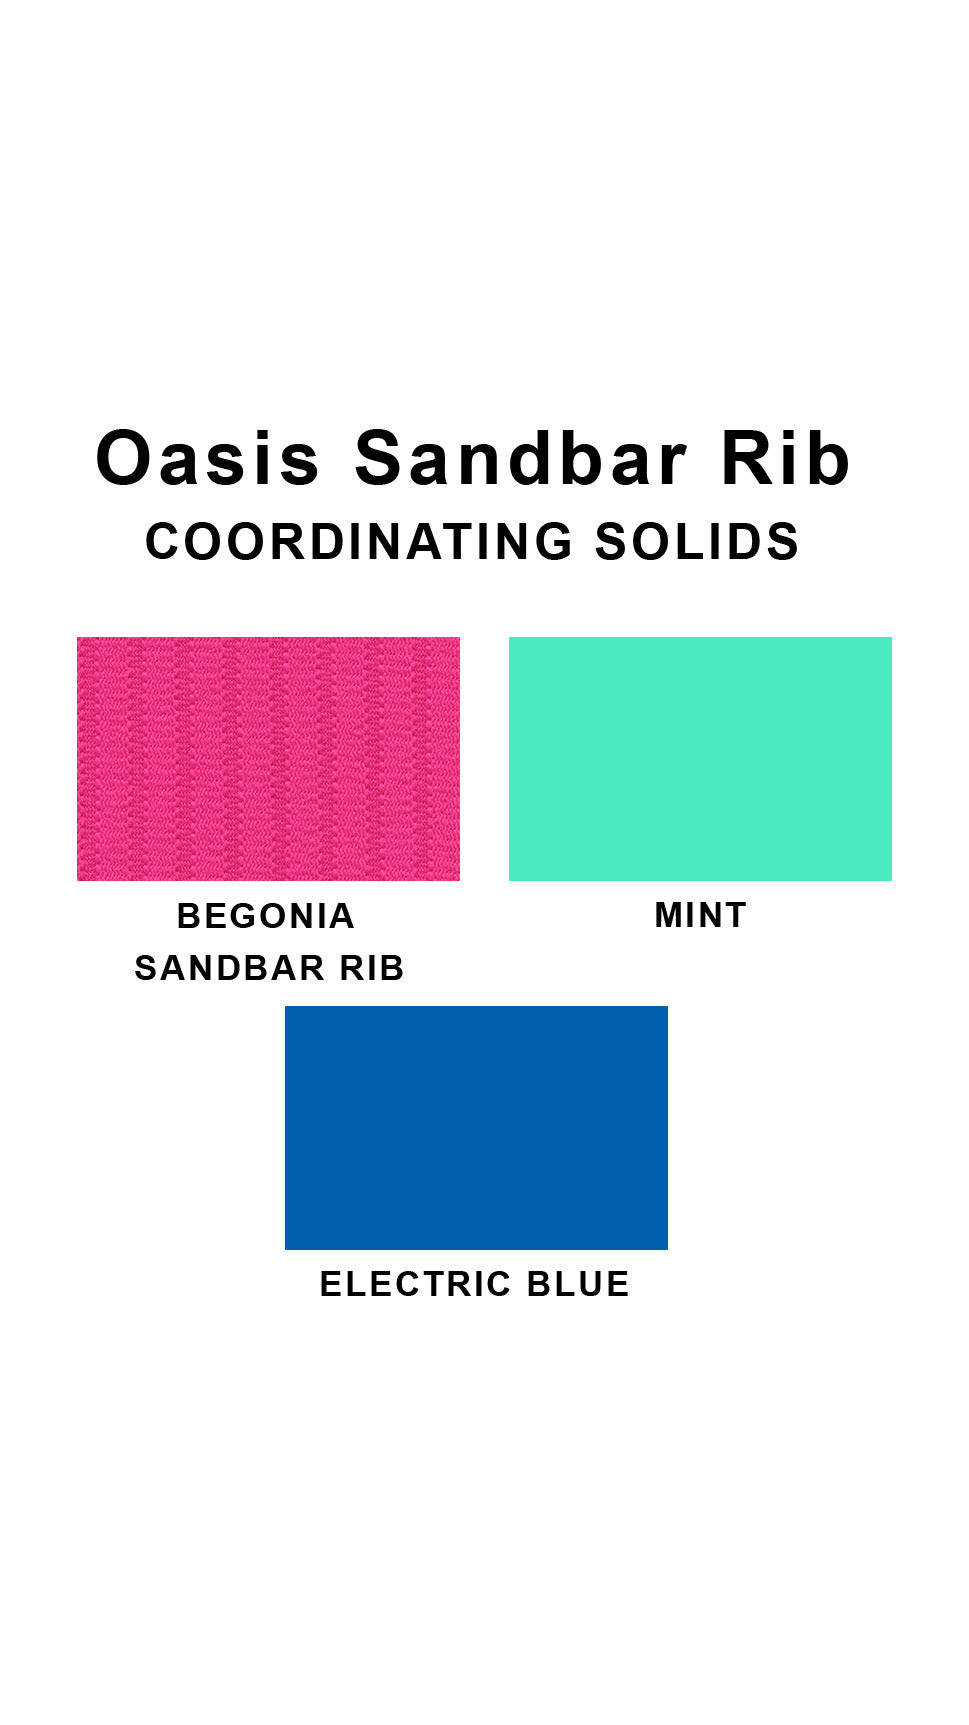 Coordinating solids chart for Oasis Sandbar Rib swimsuit print: Begonia Sandbar Rib, Mint and Electric Blue